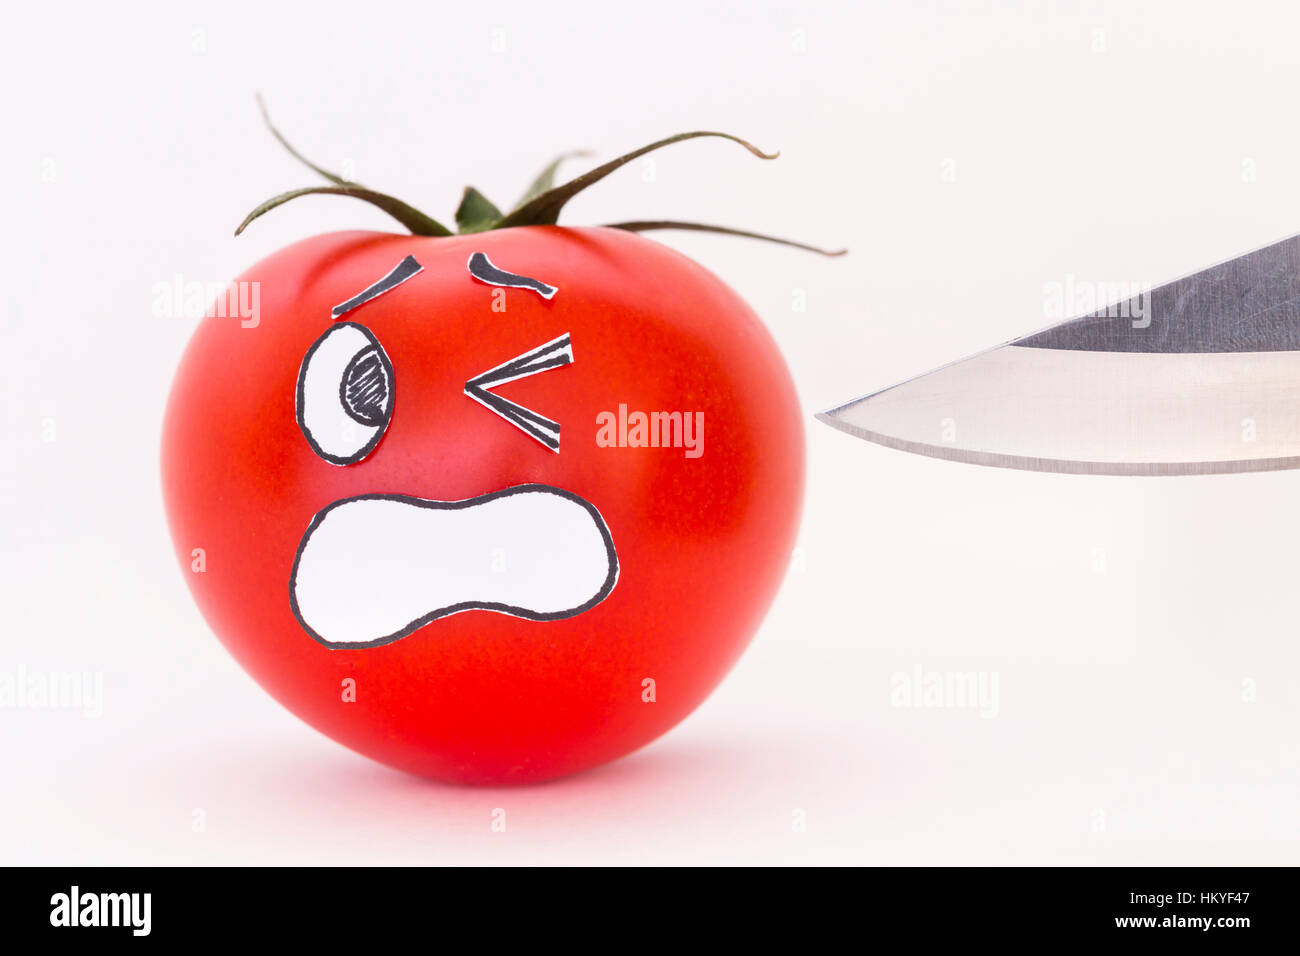 Dibujos animados de tomate fotografías e imágenes de alta resolución - Alamy